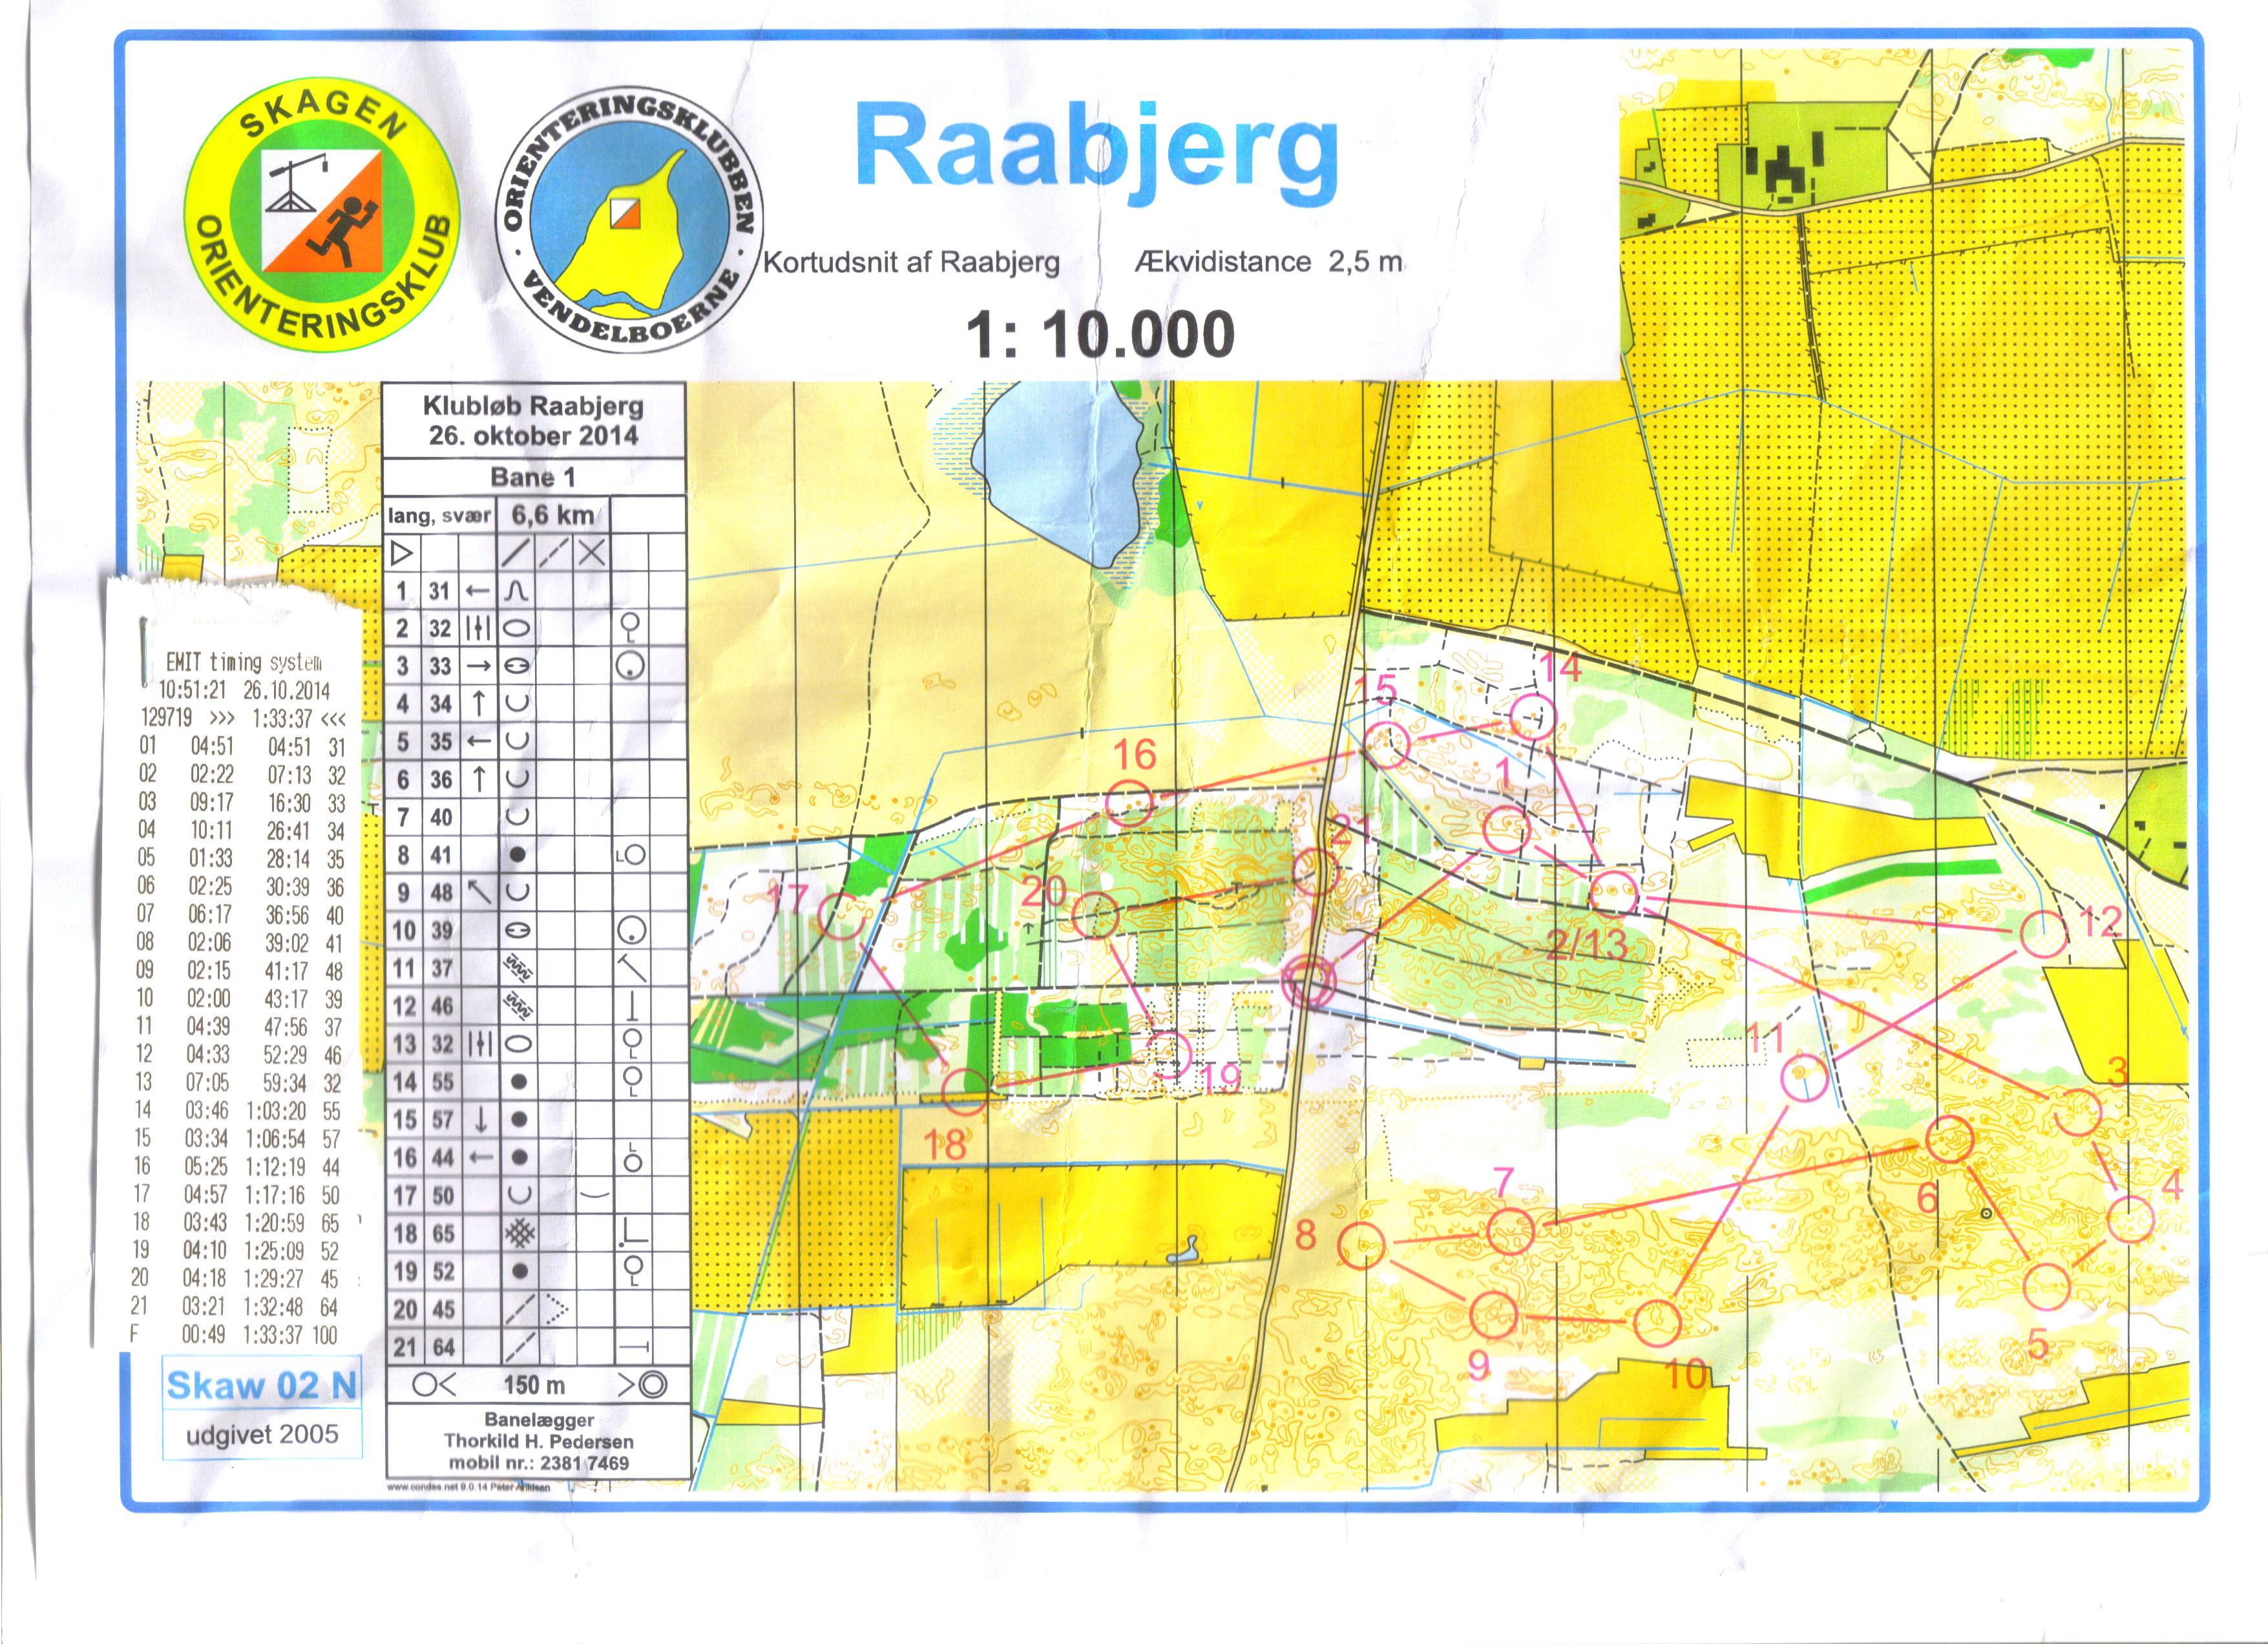 Raabjerg (27-10-2014)